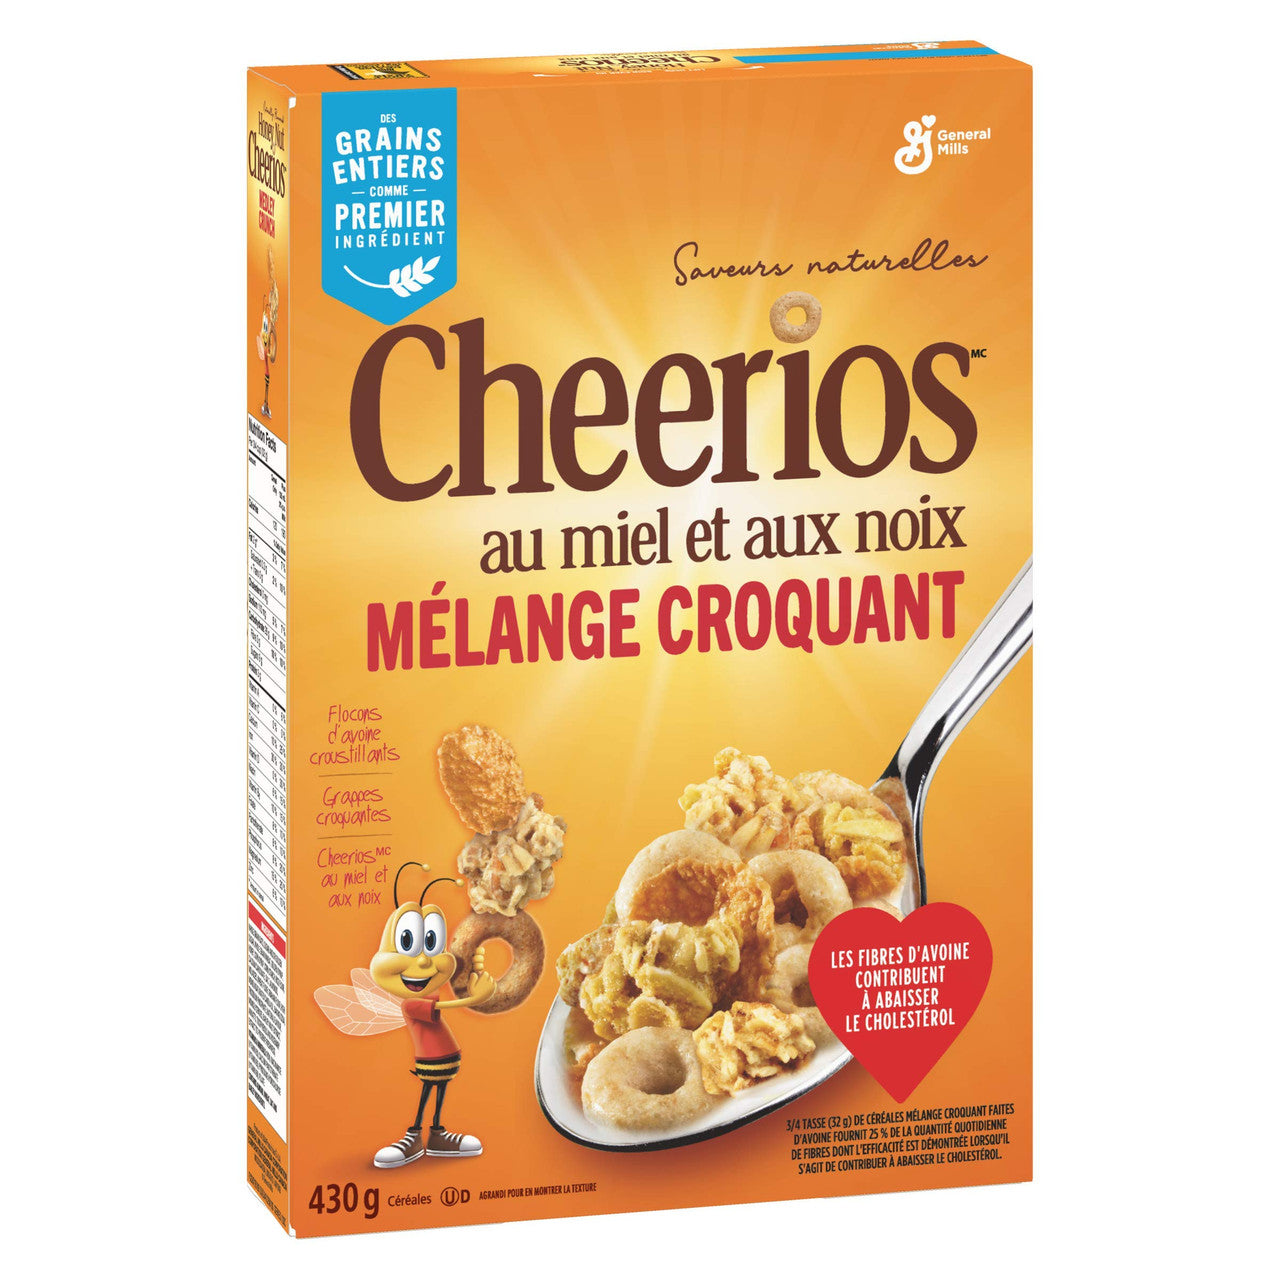 Honey Nut Cheerios Breakfast Cereal, Whole Grains, 430 g, 430 g